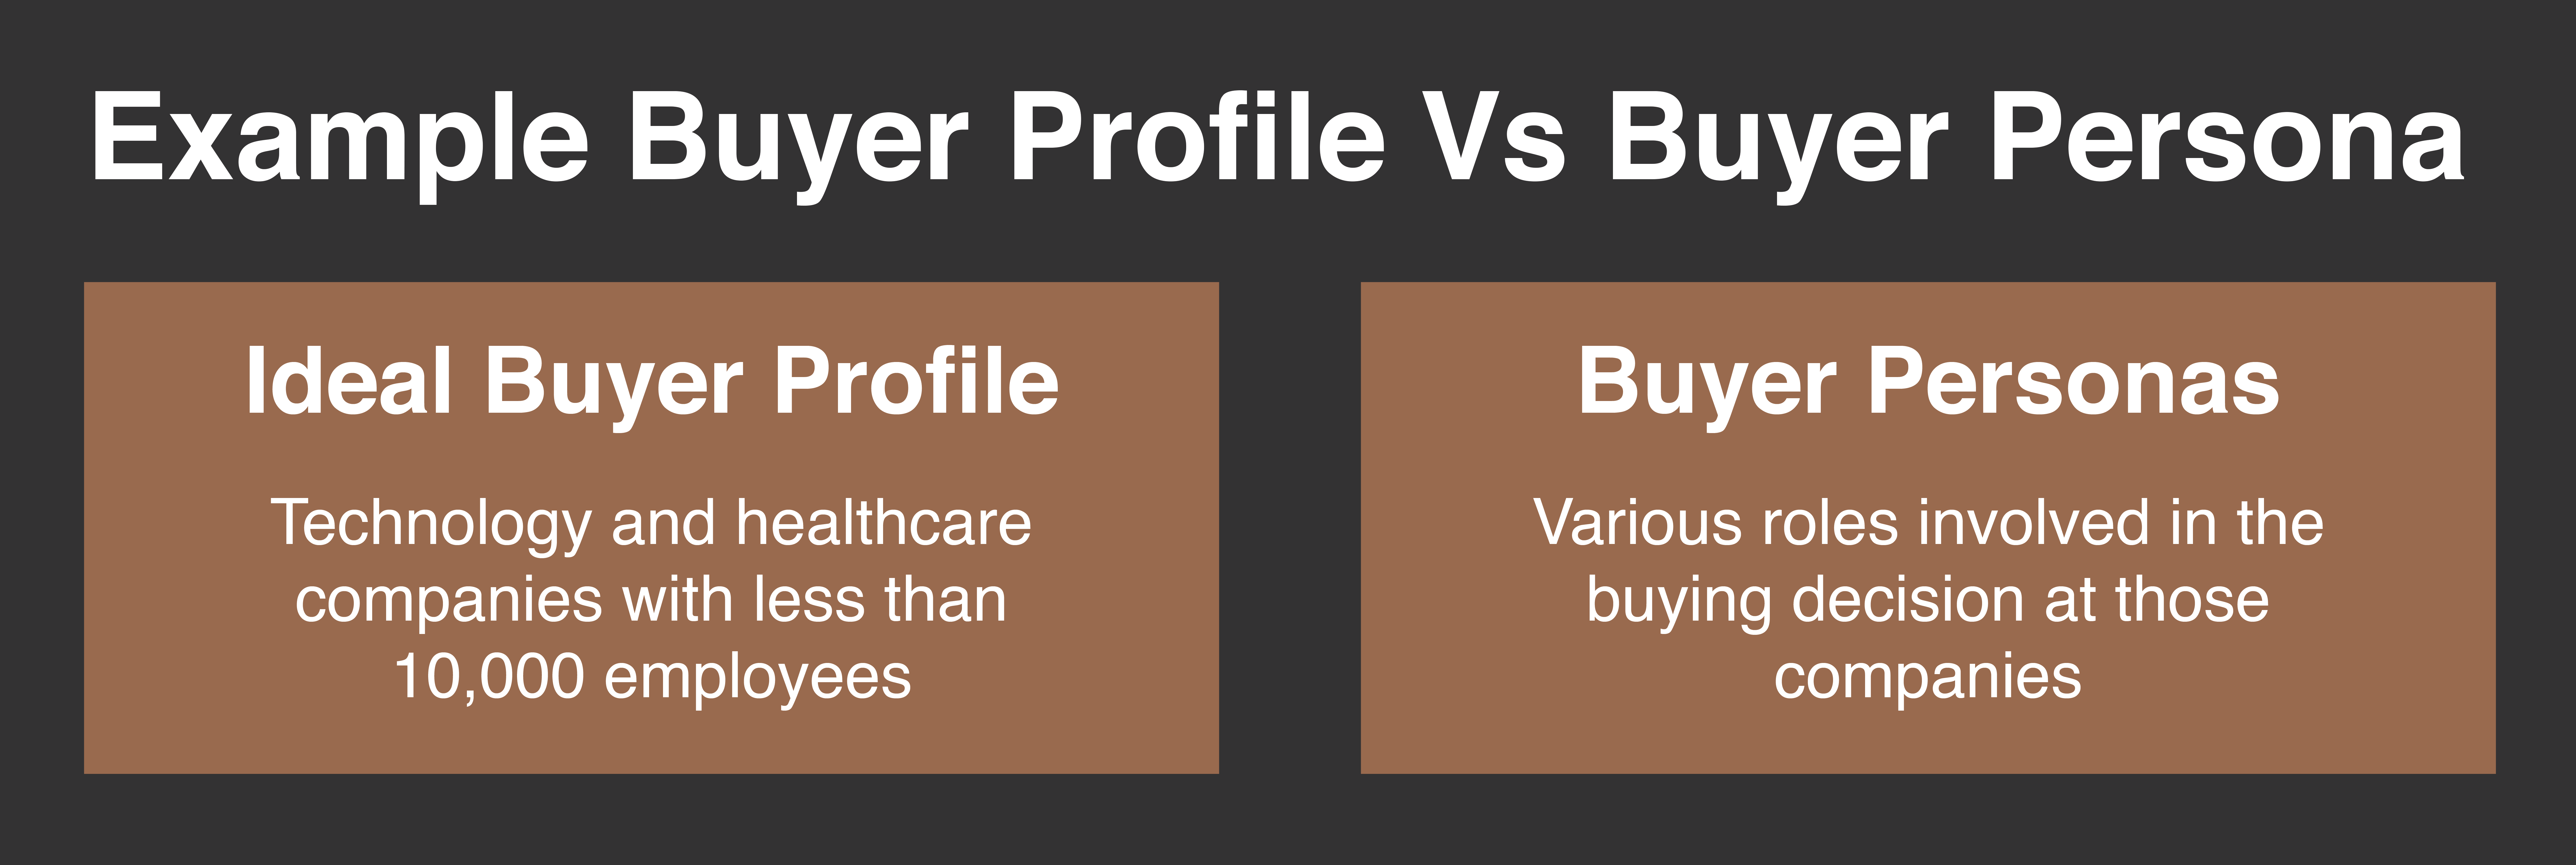 Catalyst-Buyer-persona-profile-visual